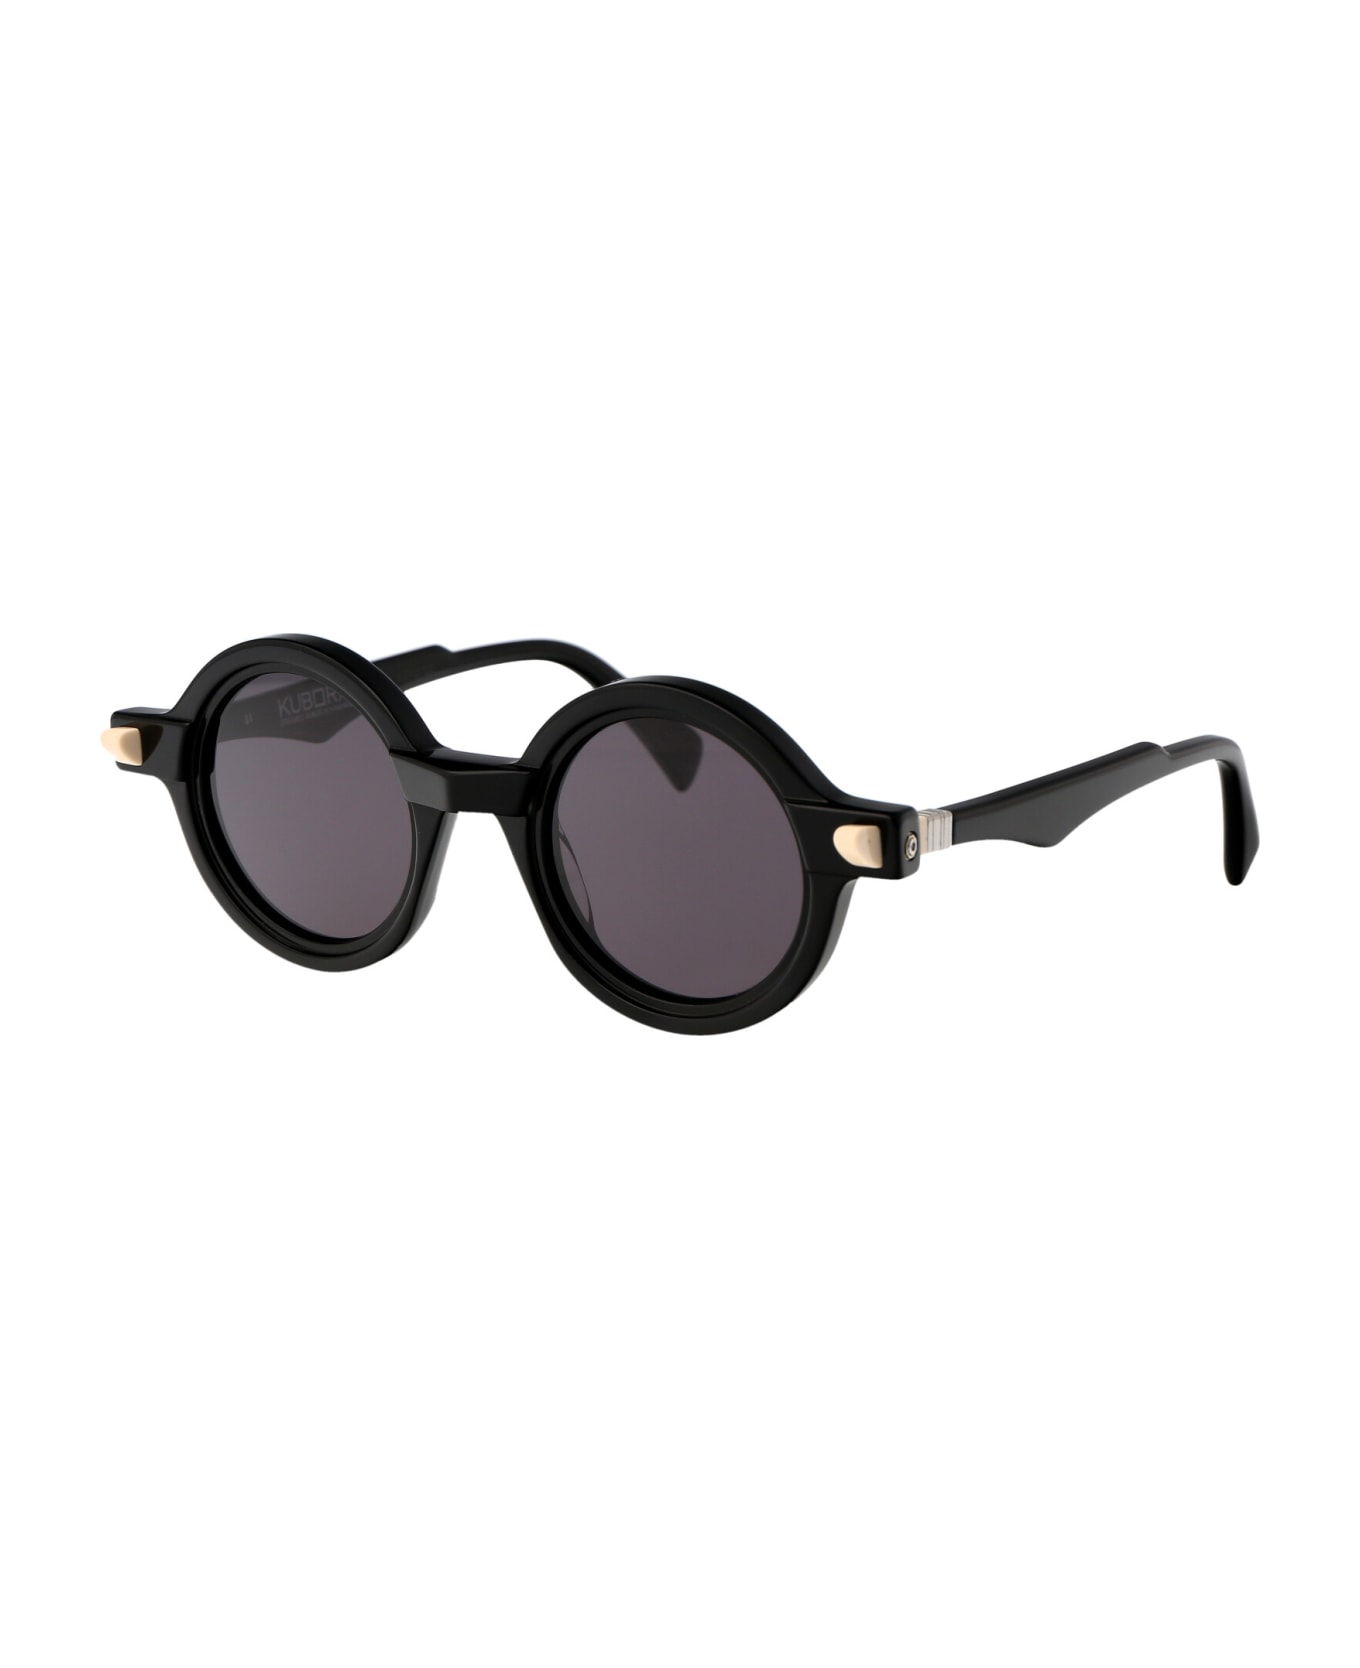 Kuboraum Maske Q7 Sunglasses - BS 2grey